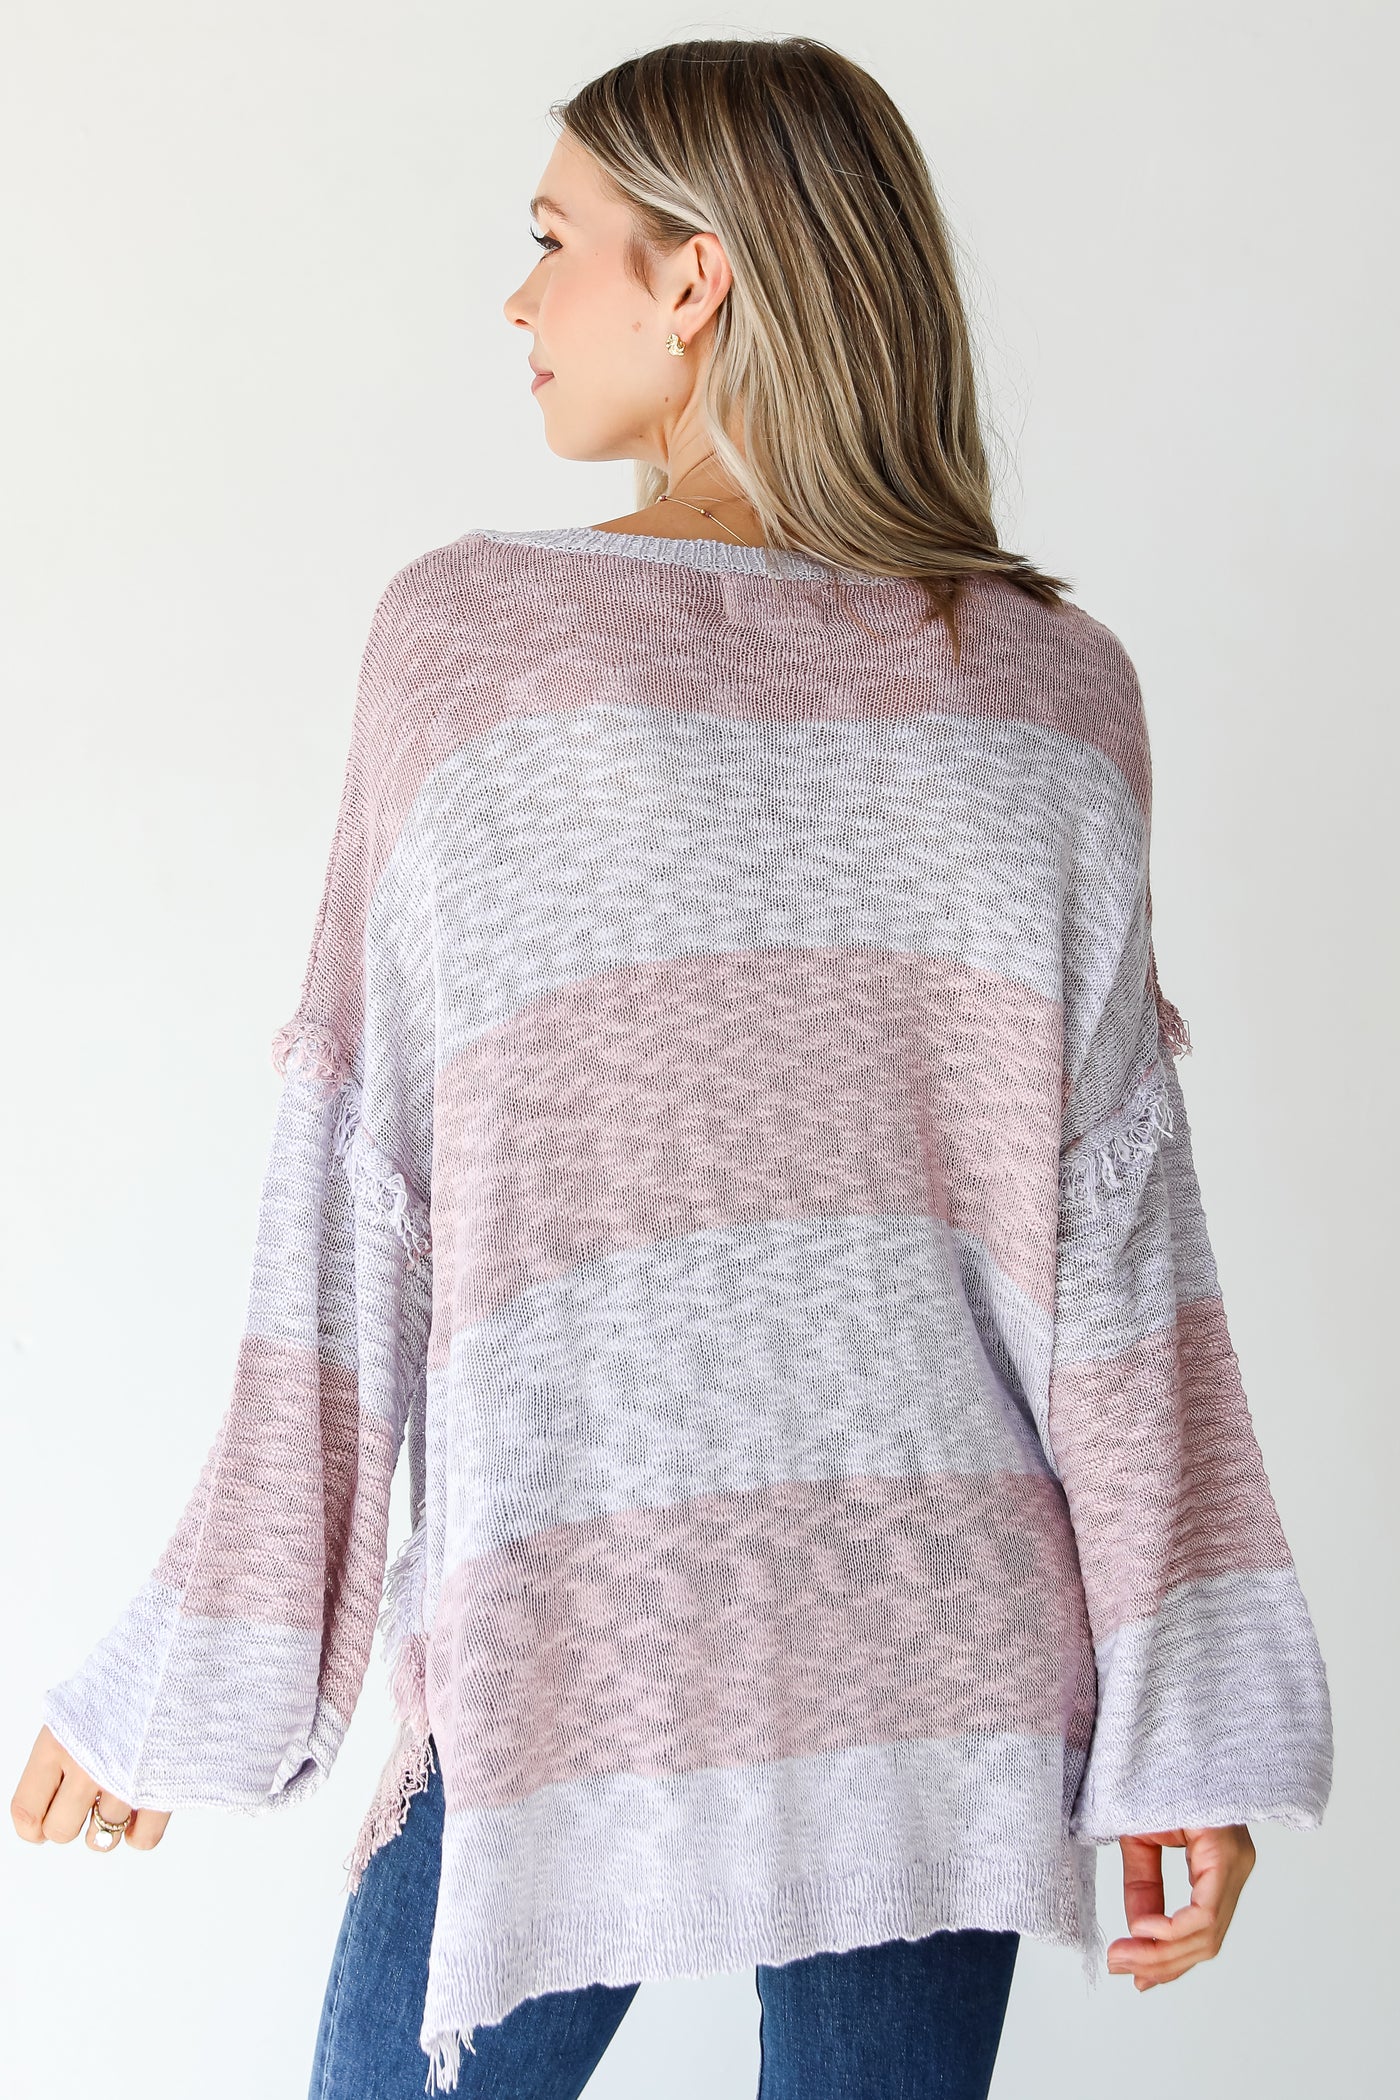 lavender sweater on model